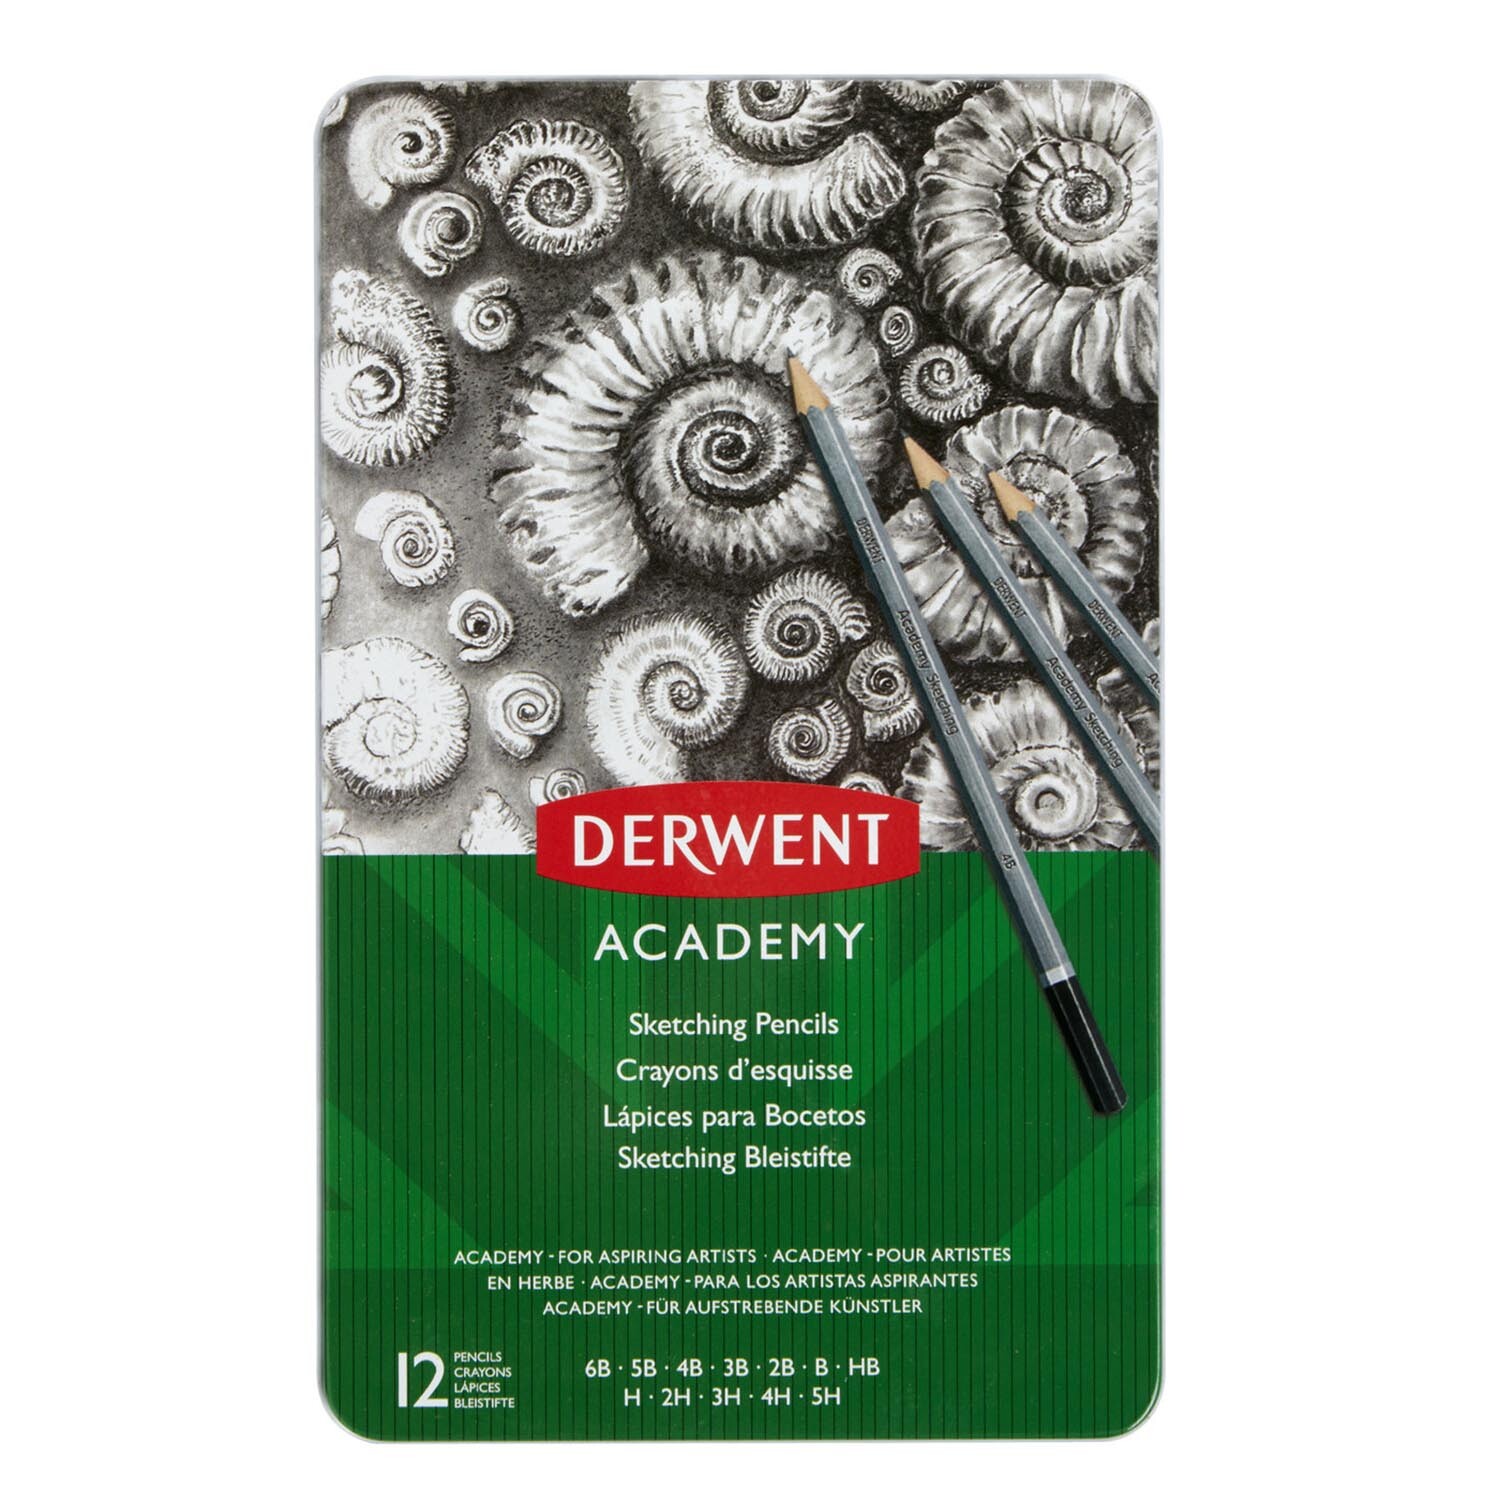 Derwent Academy Sketching Pencils 12 Pack Image 3